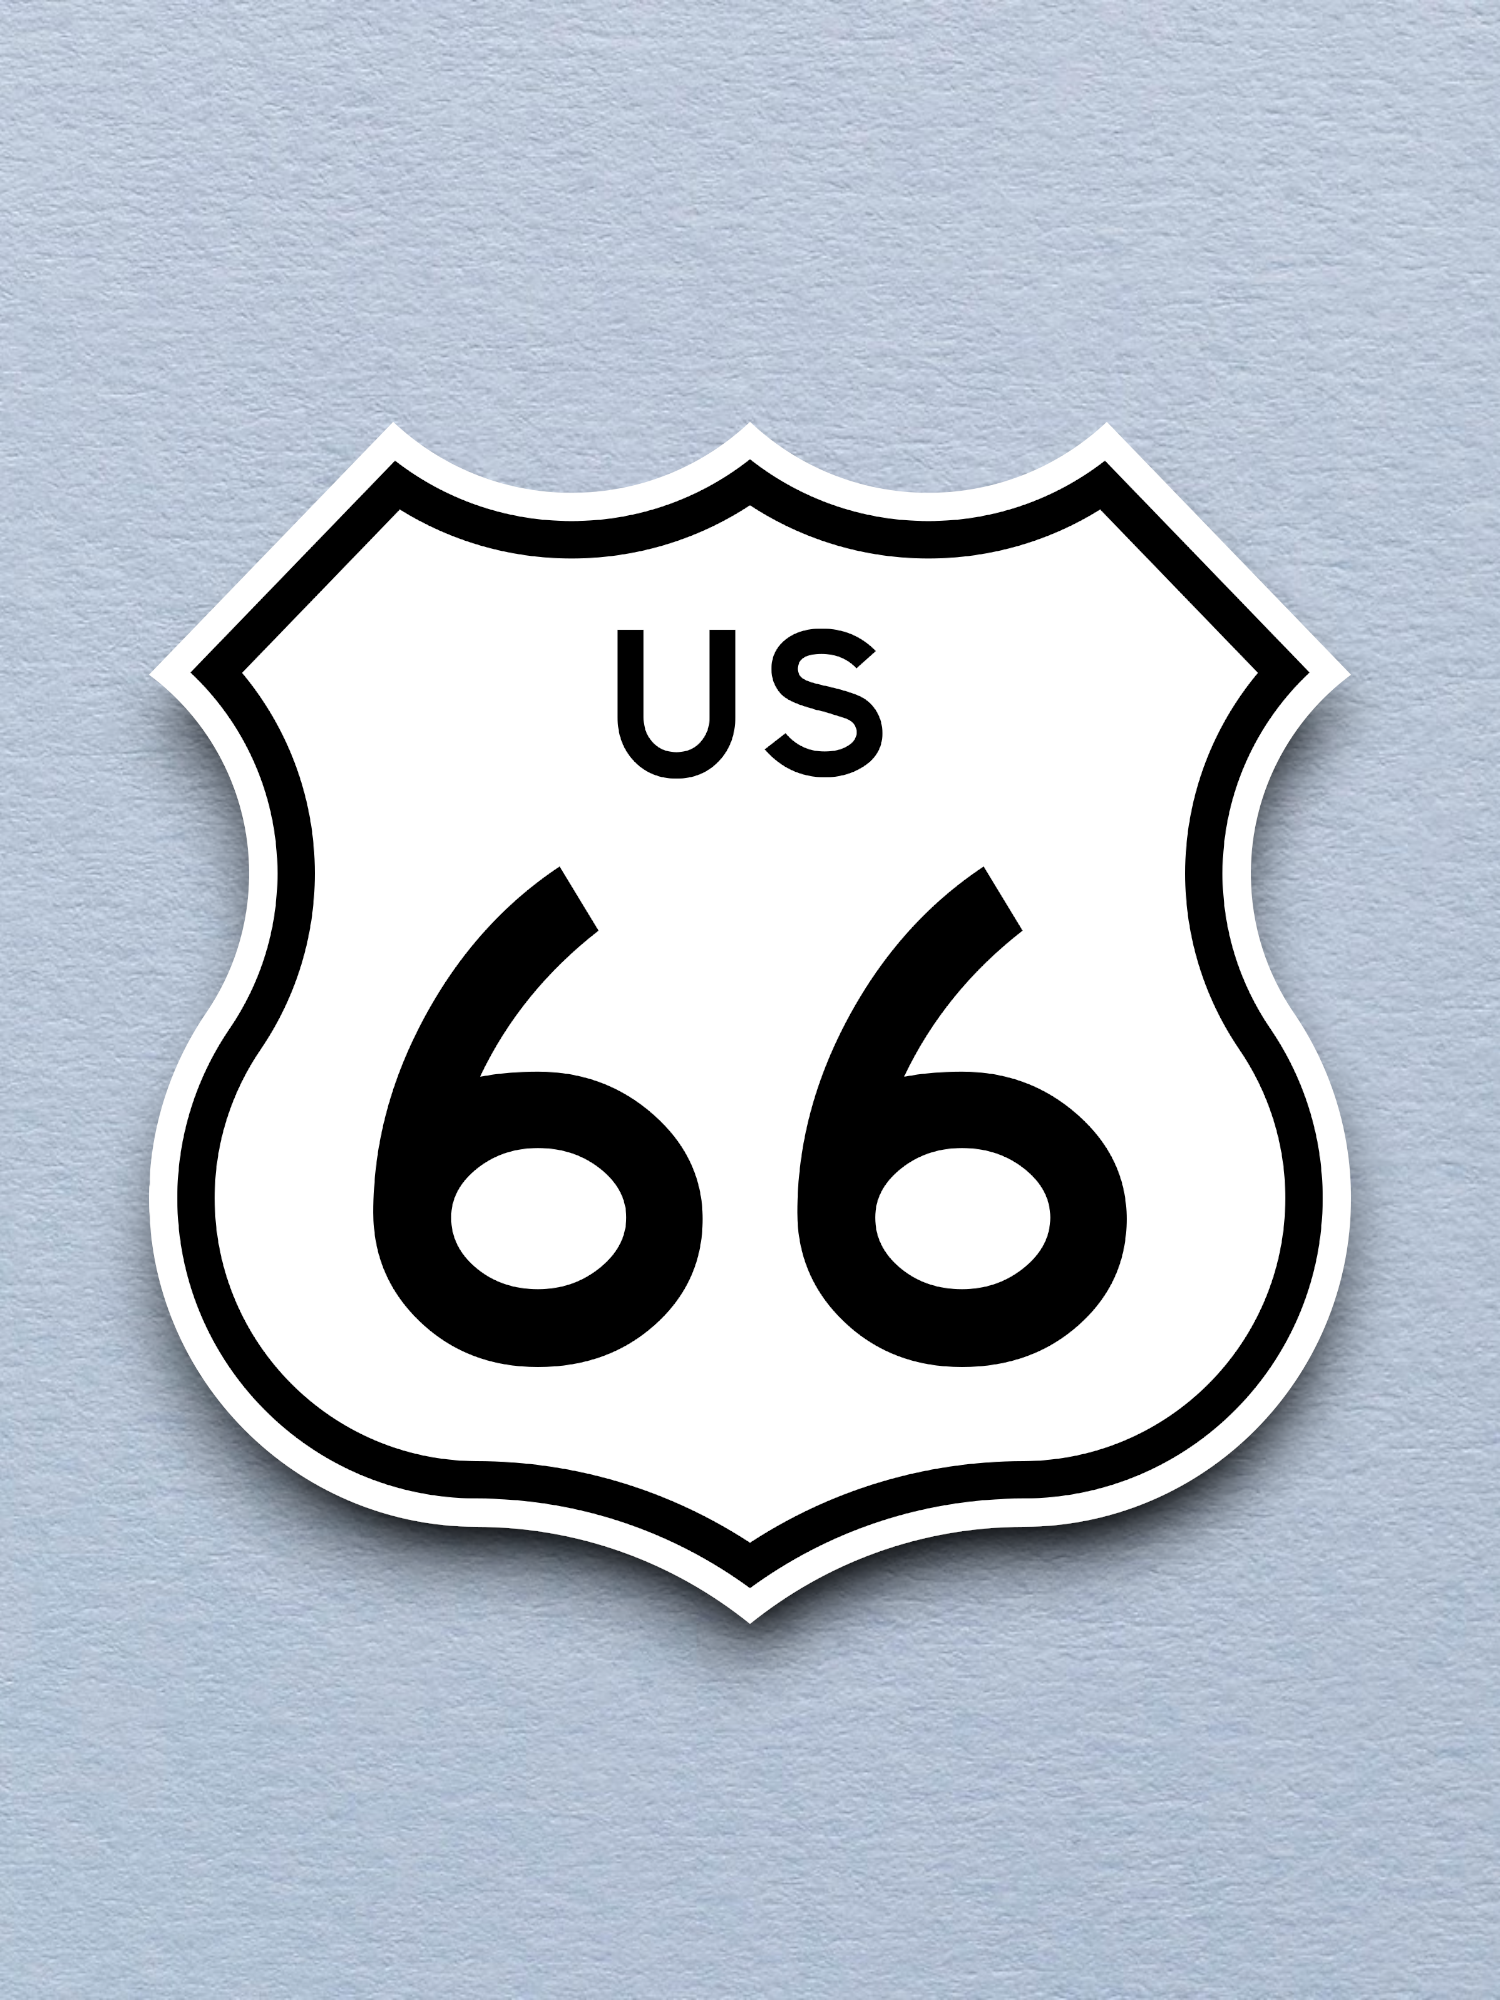 U.S. Route 66 Road Sign Sticker